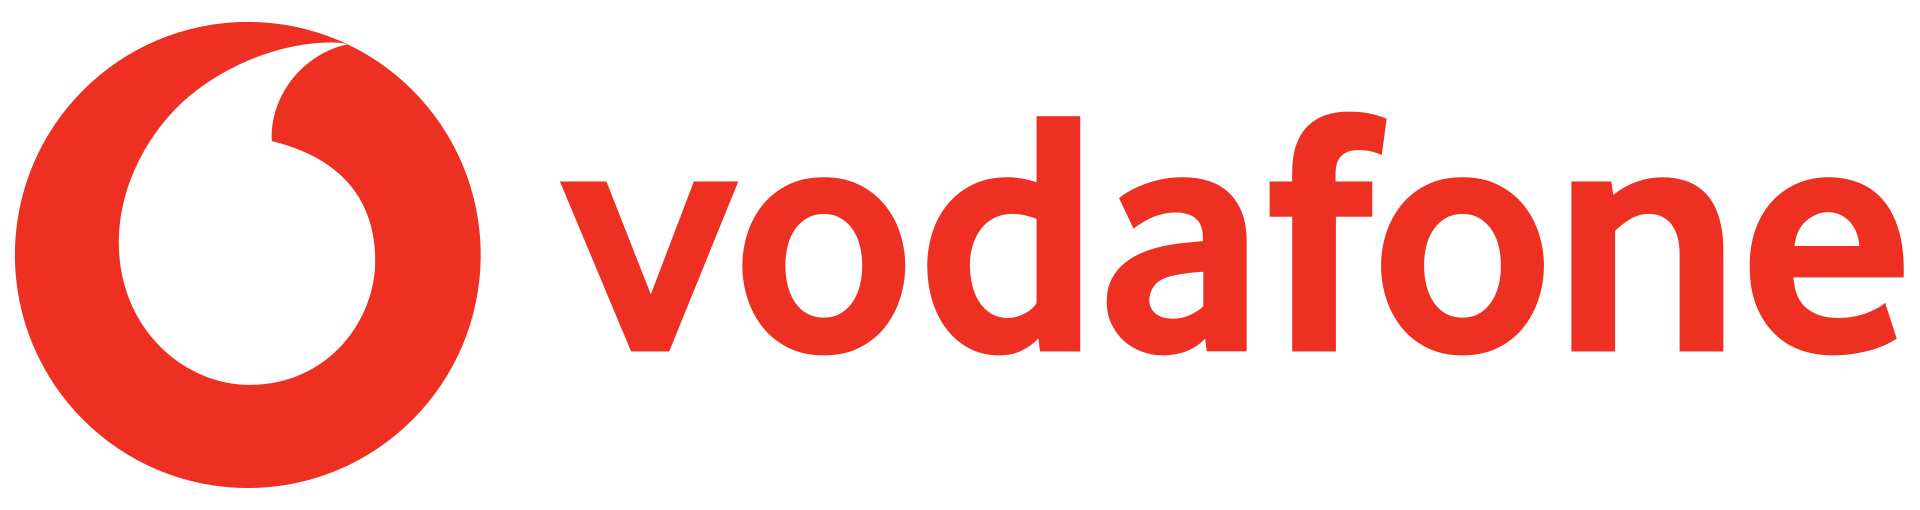 Vodafone Turkey - Vodafone Telekomünikasyon Anonim Şirketi - Vodafone Mobile Operations - KKTC Telsim - Vodafone Net - Турецкий оператор мобильной связи